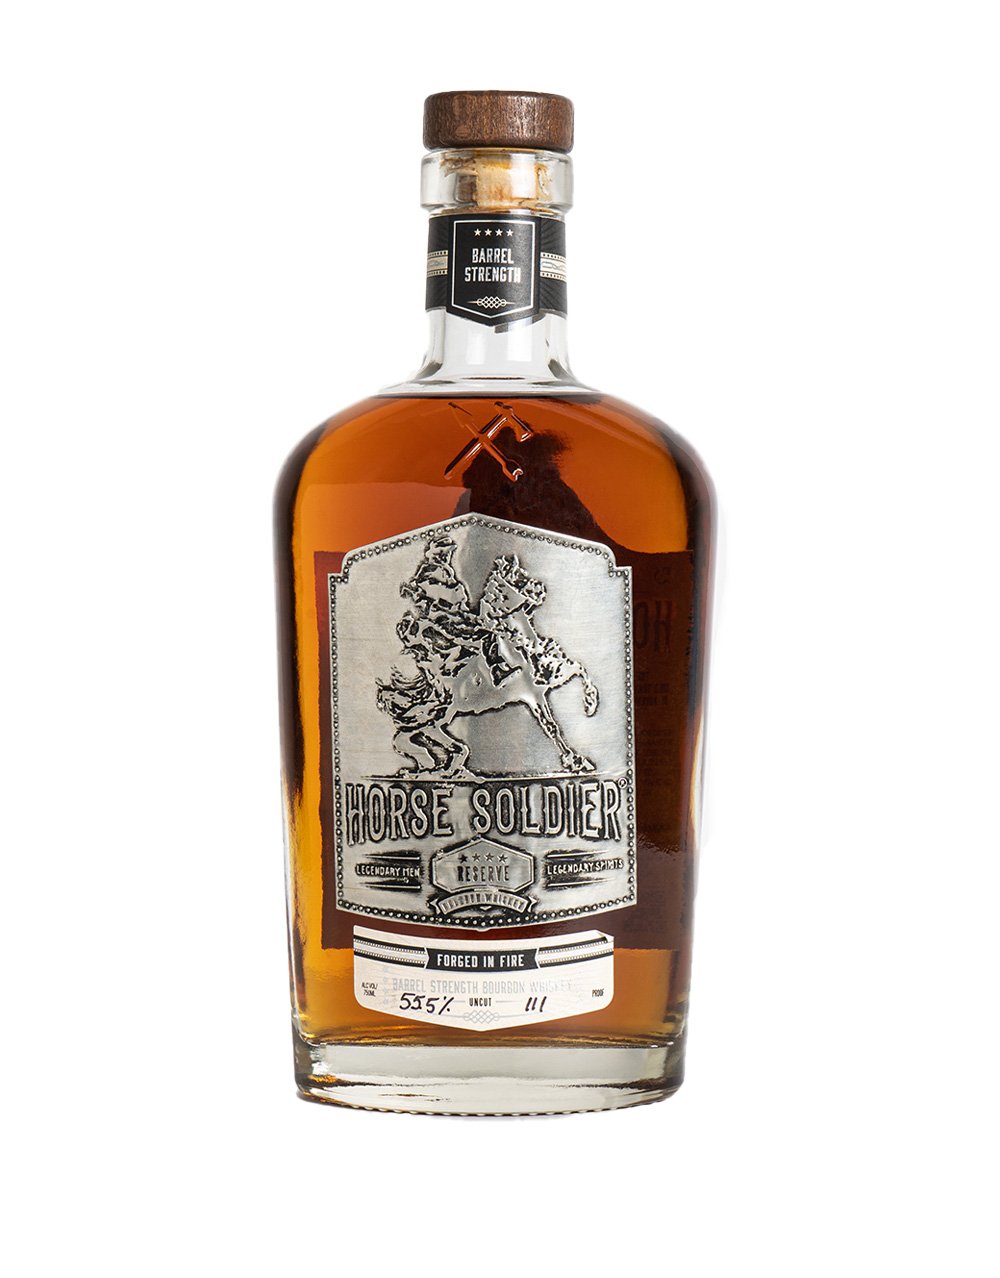 Horse Soldier Barrel Strength Bourbon Whiskey -750 ml